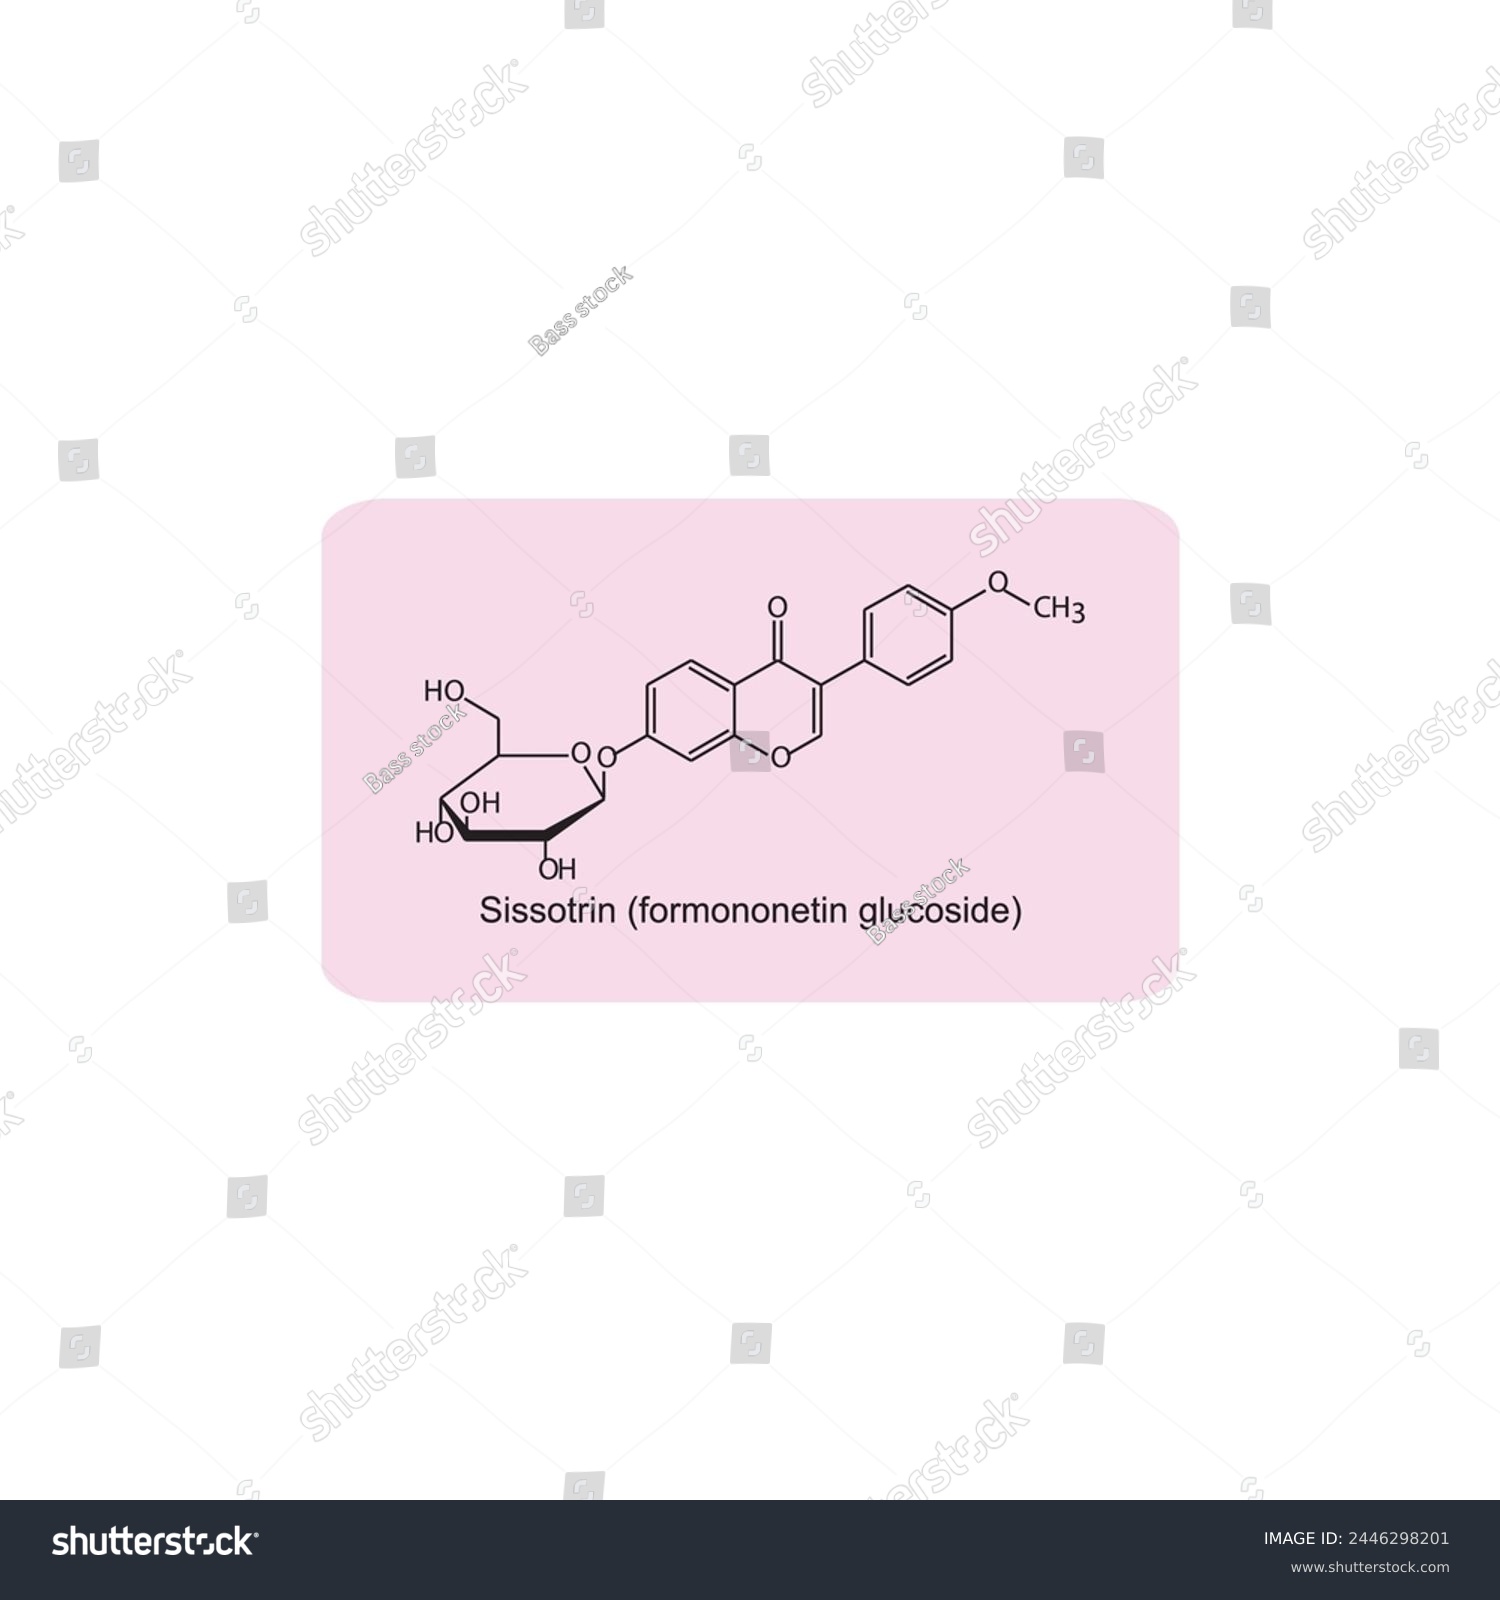 SVG of Sissotrin (formononetin glucoside) skeletal structure diagram.Isoflavanone compound molecule scientific illustration on pink background. svg